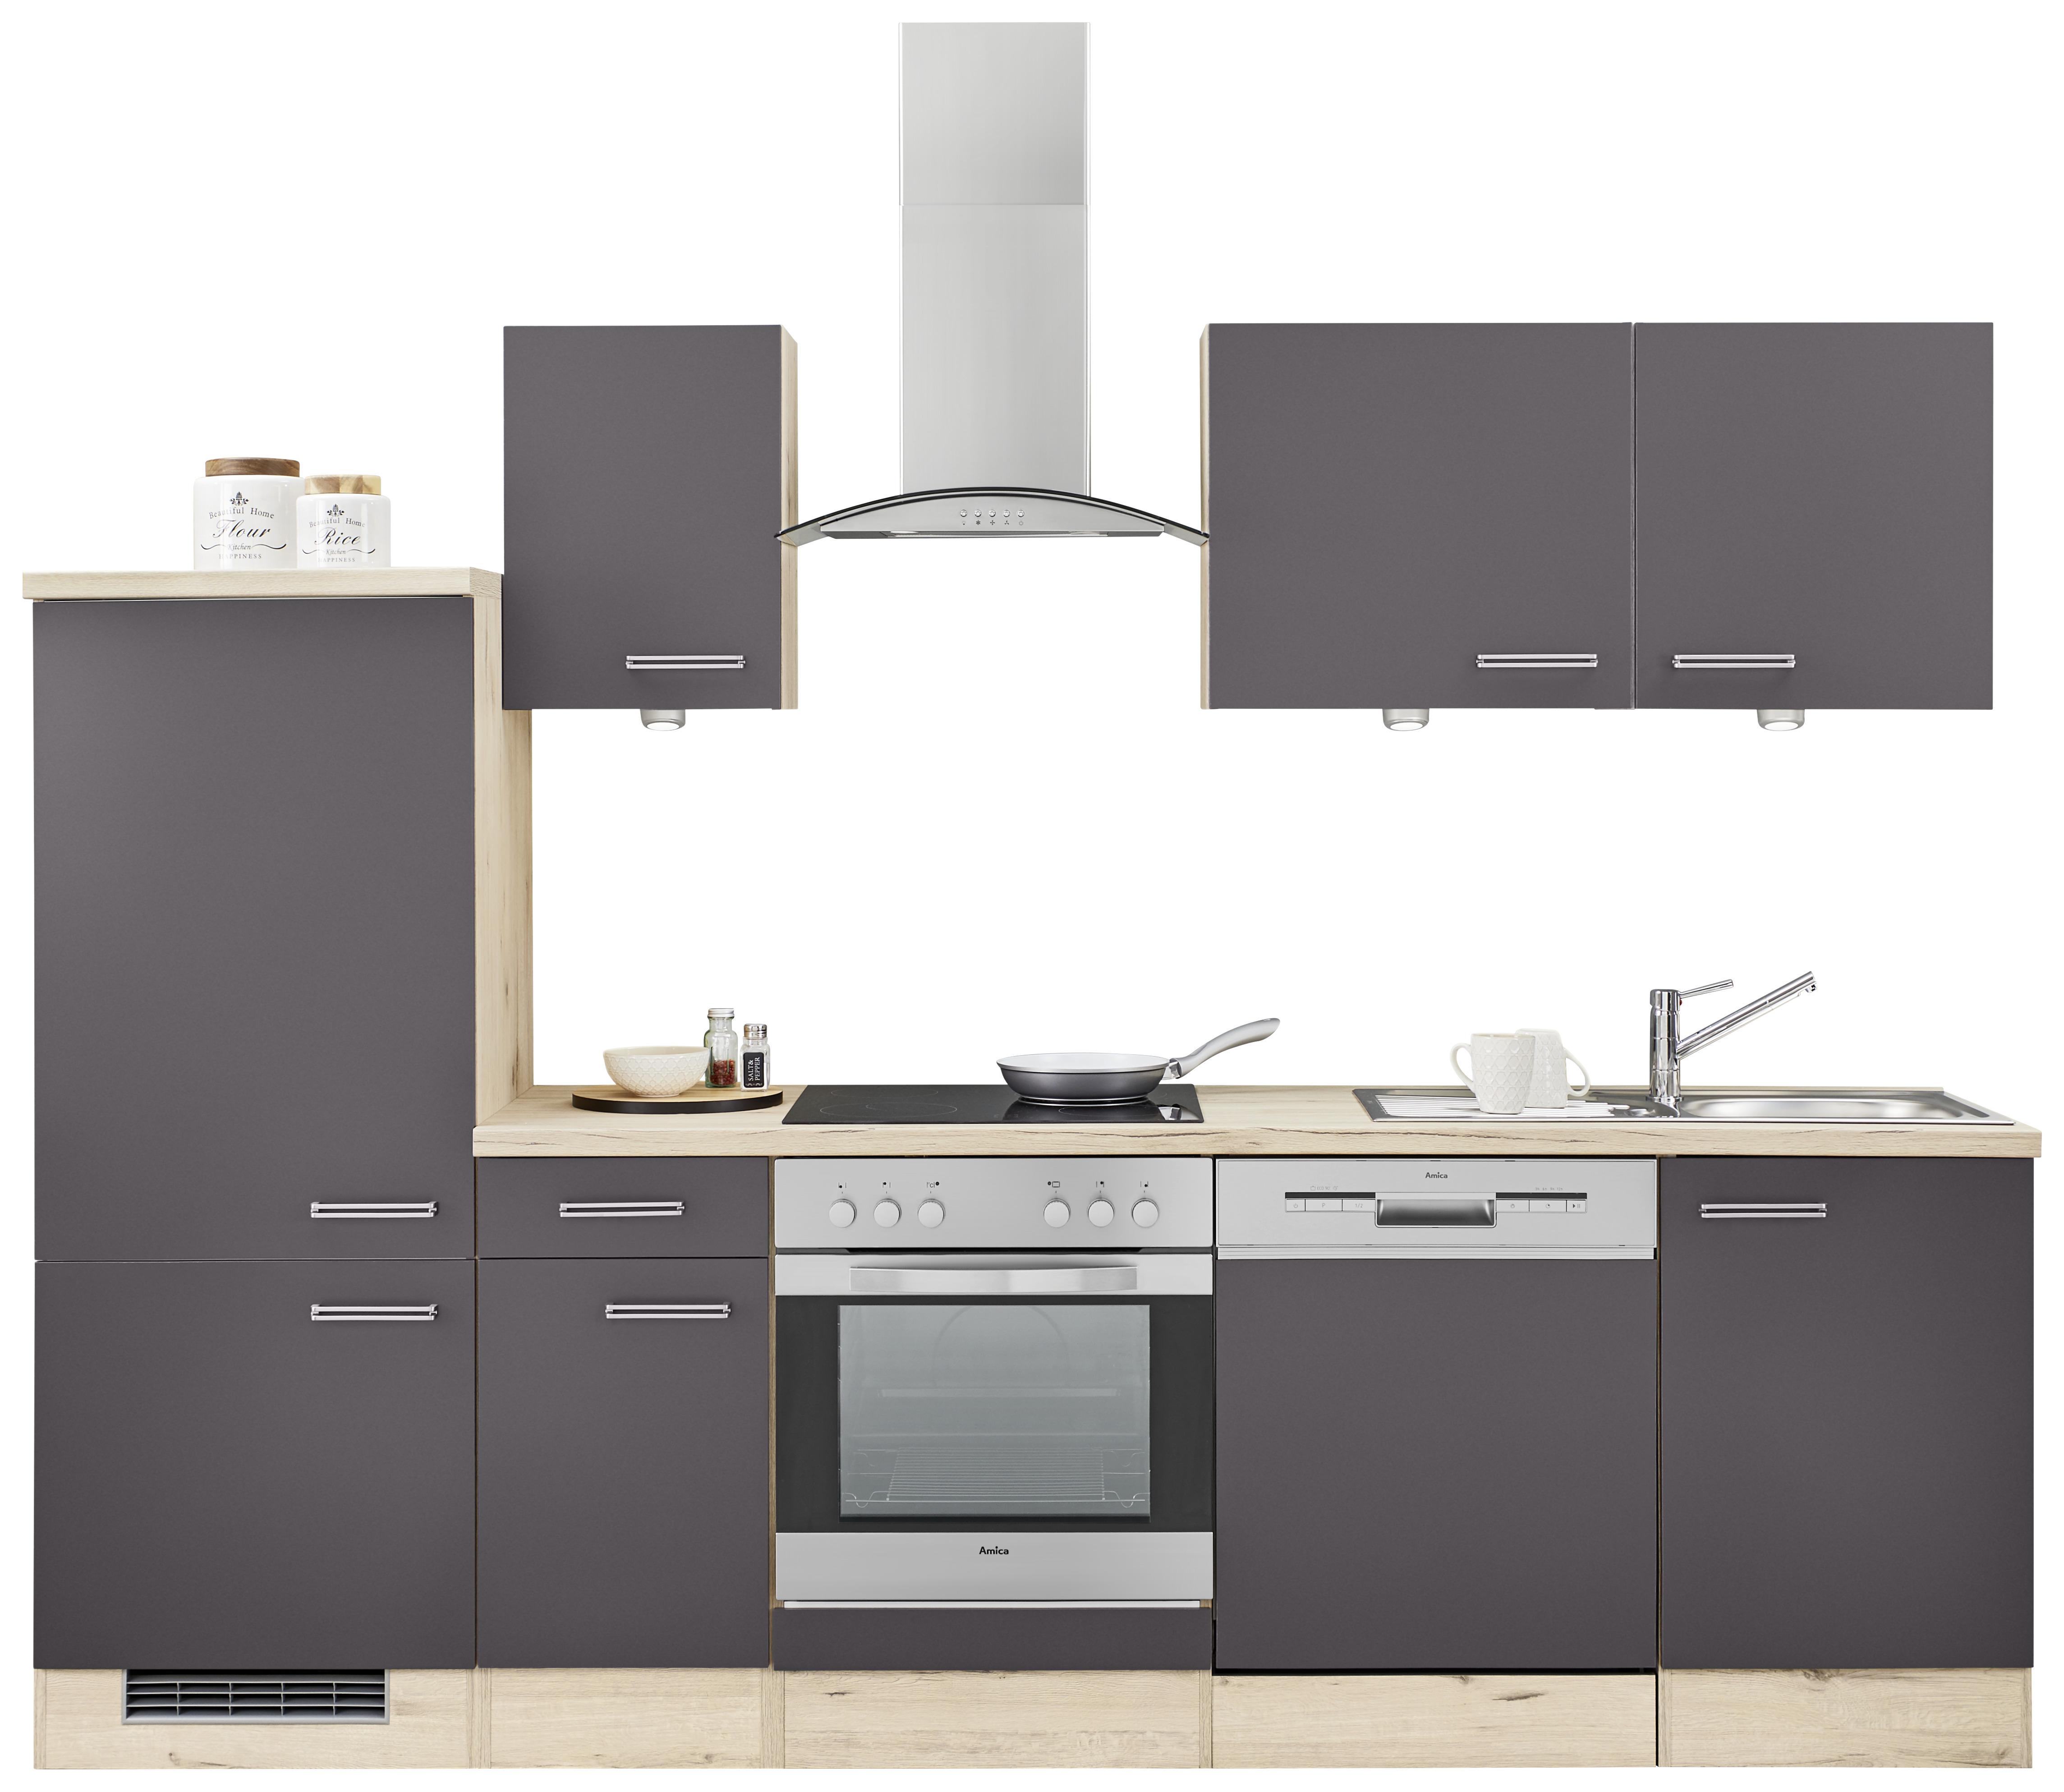 Kuhinjski Blok Milano - boje hrasta/antracit, Modern, drvni materijal (270cm) - Modern Living